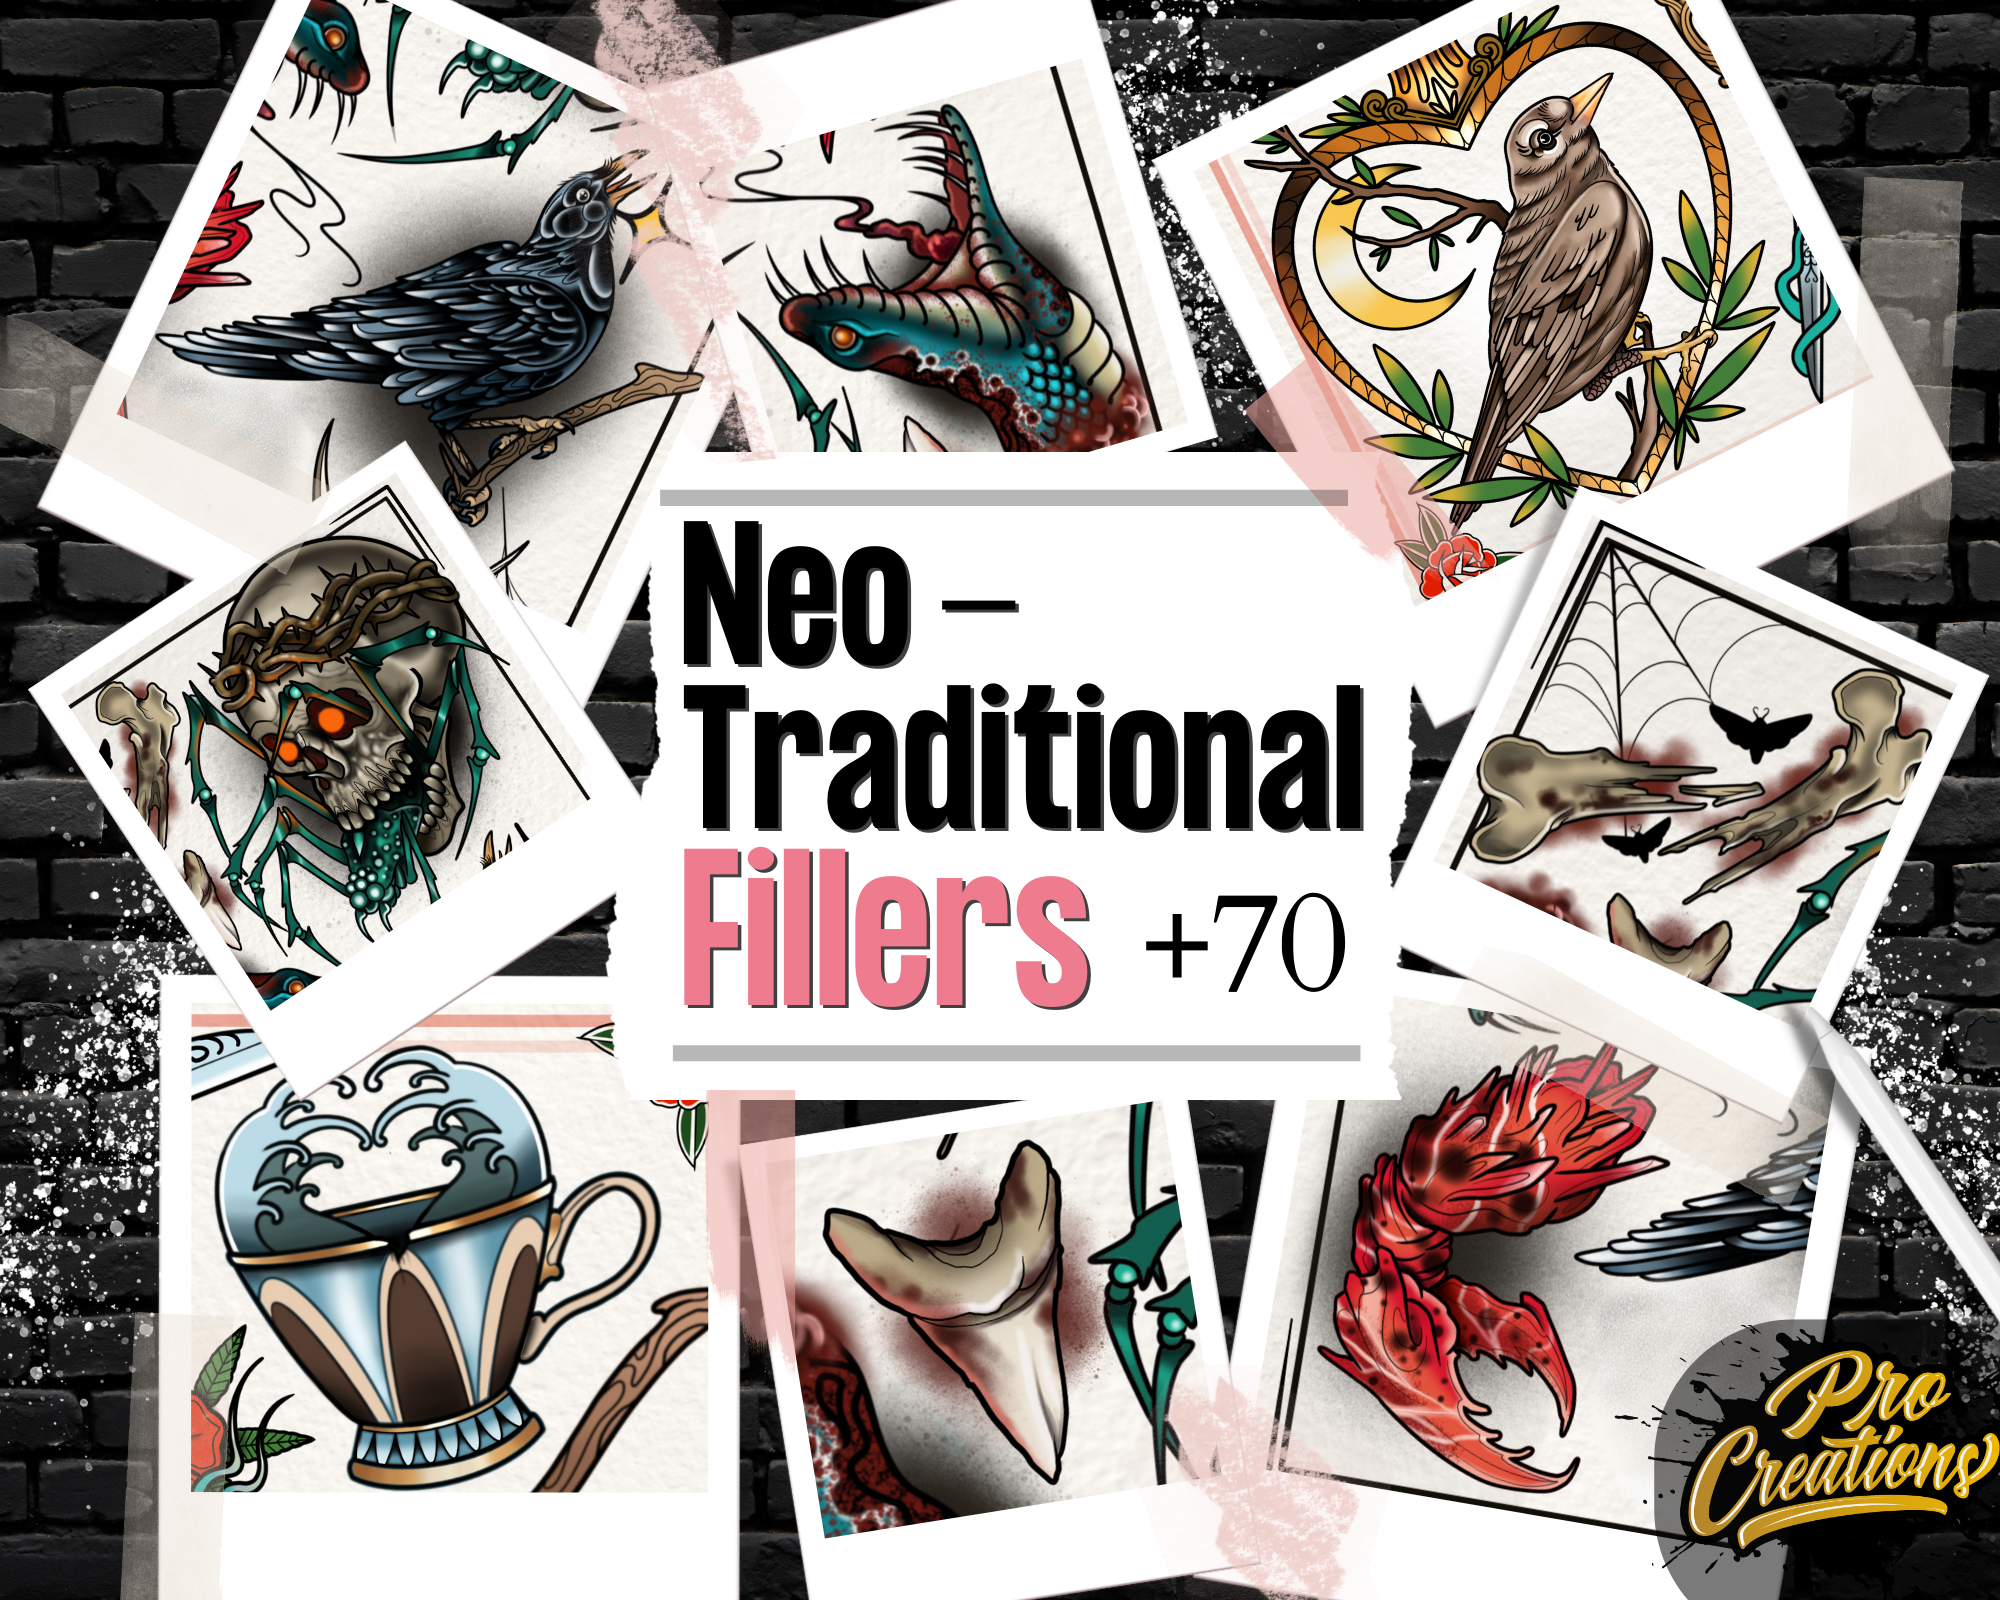 Neo-Traditionelles Megapaket: 370+